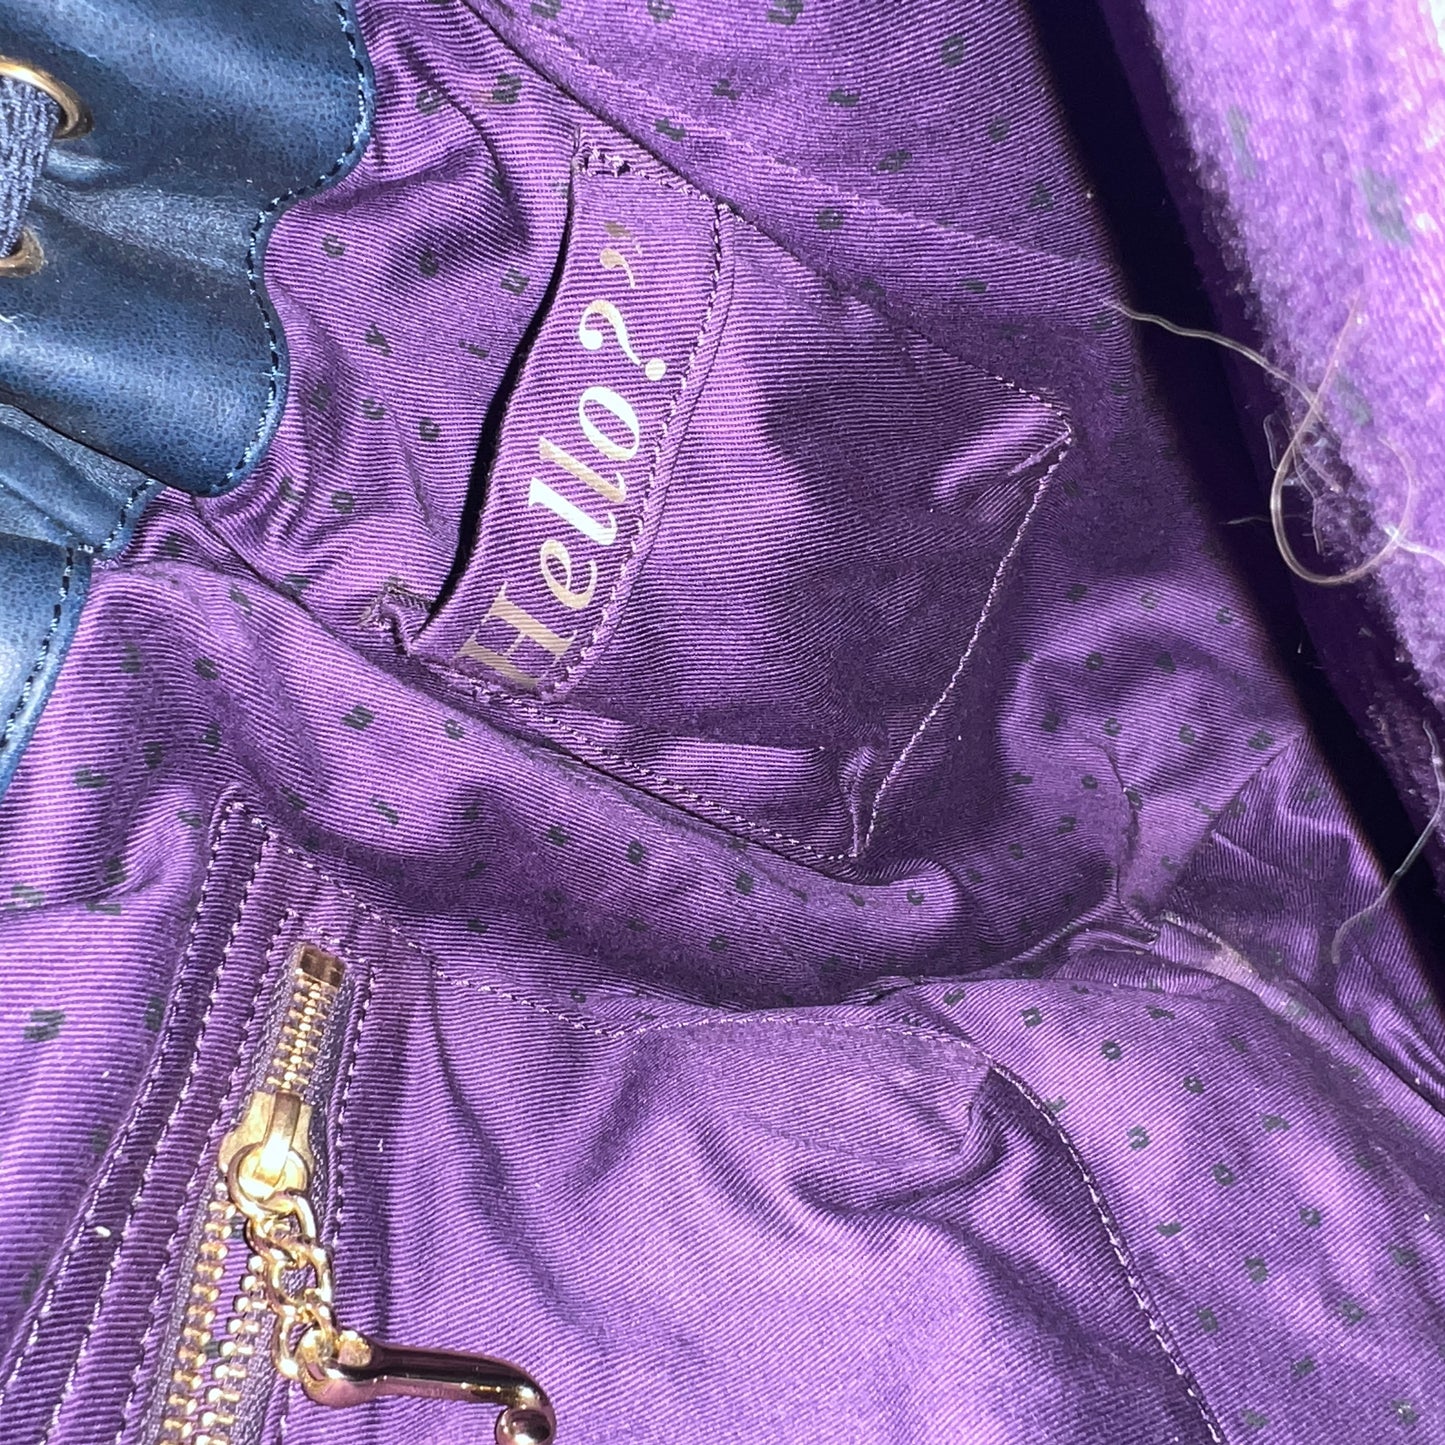 Vintage Pink Juicy Couture Tote Bag Purse Handbag Daydreamer Terry Cloth Floral